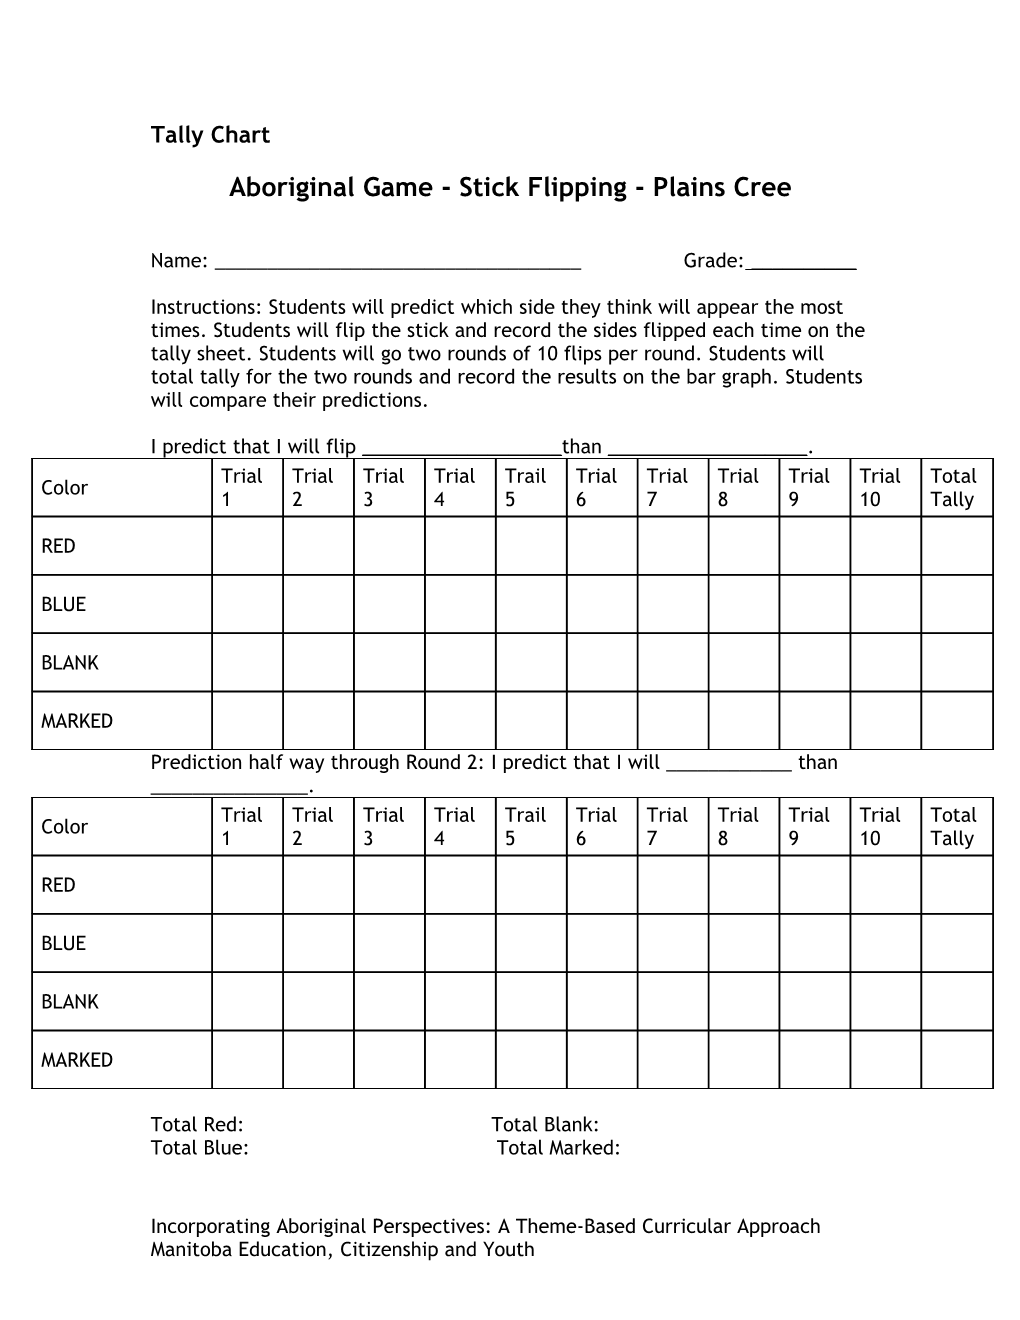 Aboriginal Game - Stick Flipping - Plains Cree